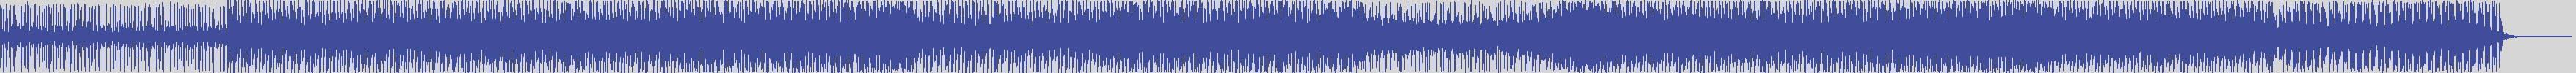 vitti_records [VIT012] Daysea - Deci Tek [Original Mix] audio wave form